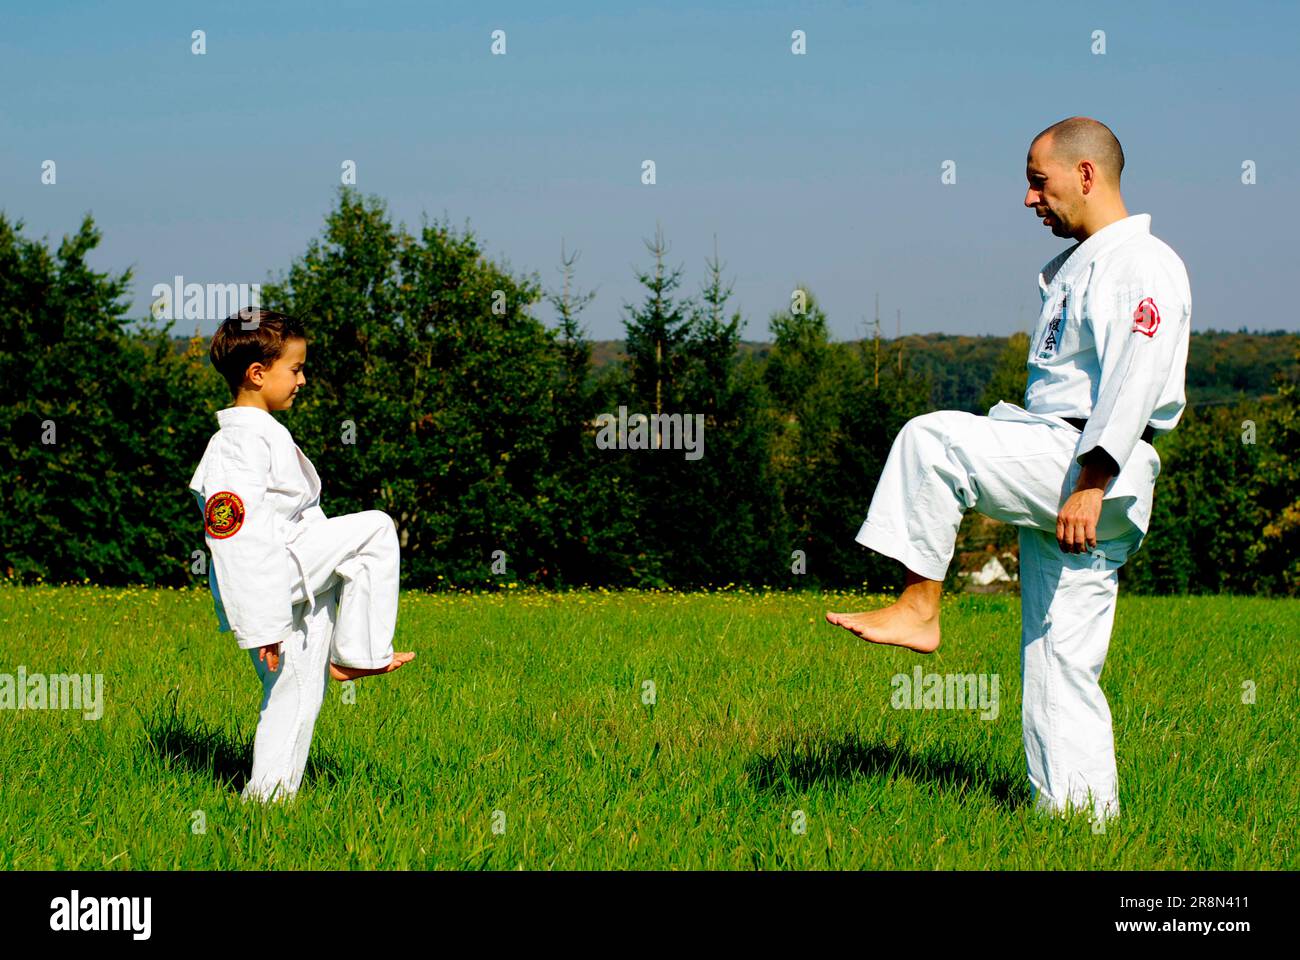 Karateschüler mit Karatelehrer, Karatelehrer, Schüler, Lehrer, Kampfkunst, Seitlich Stockfoto